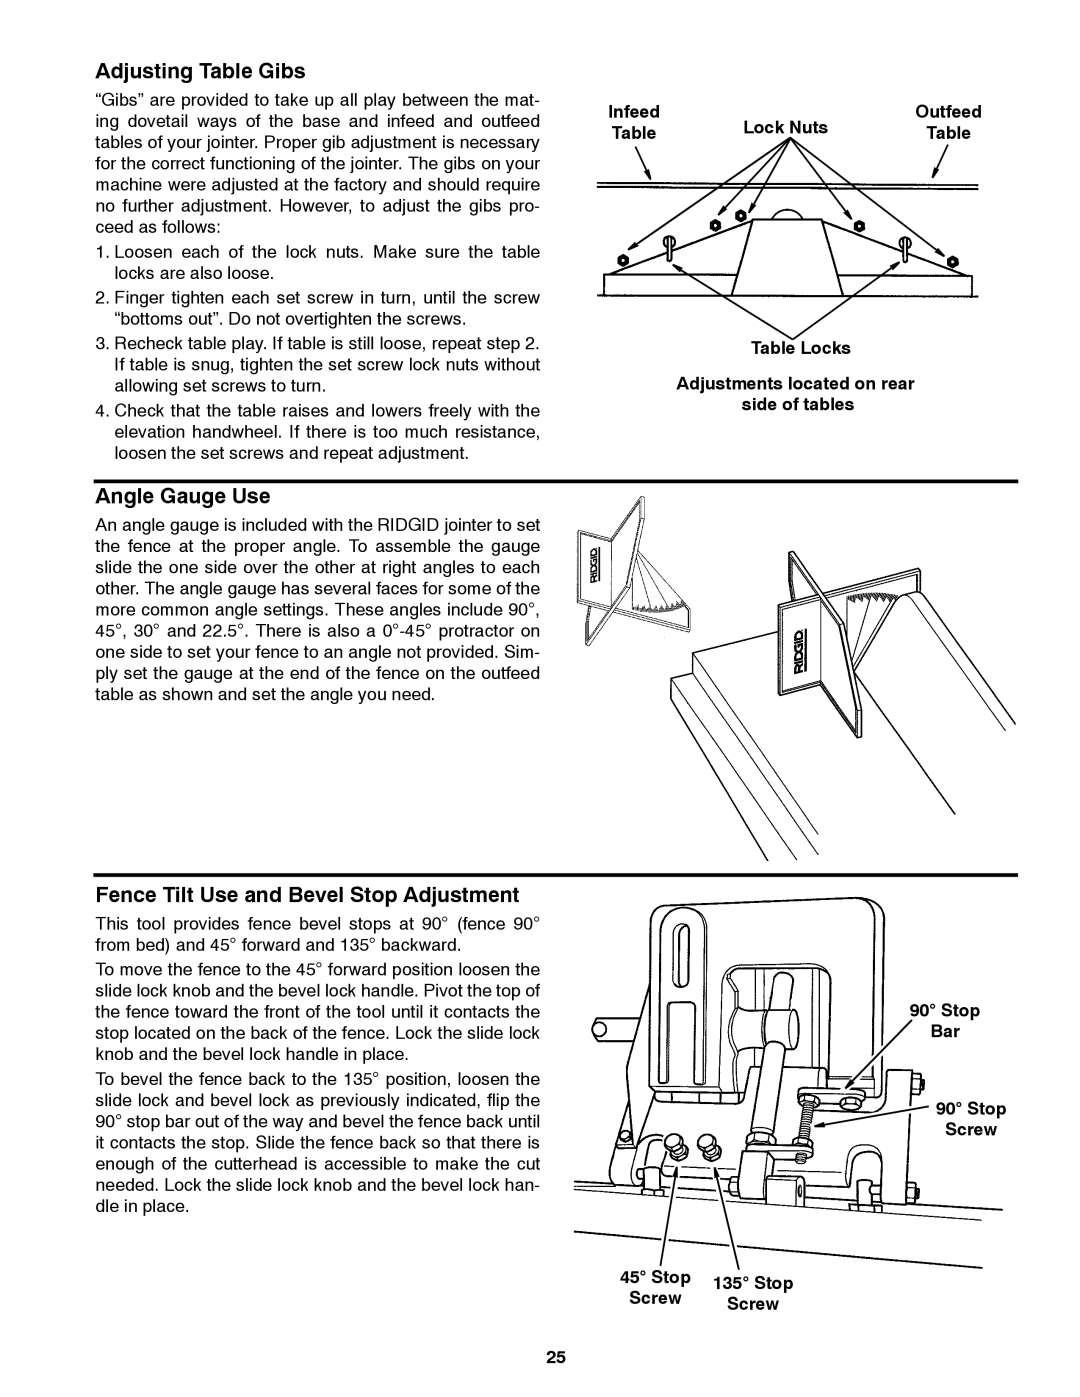 RIDGID JP06101 manual Adjusting Table Gibs, Angle Gauge Use, Fence Tilt Use and Bevel Stop Adjustment, Stop Screw Bar 